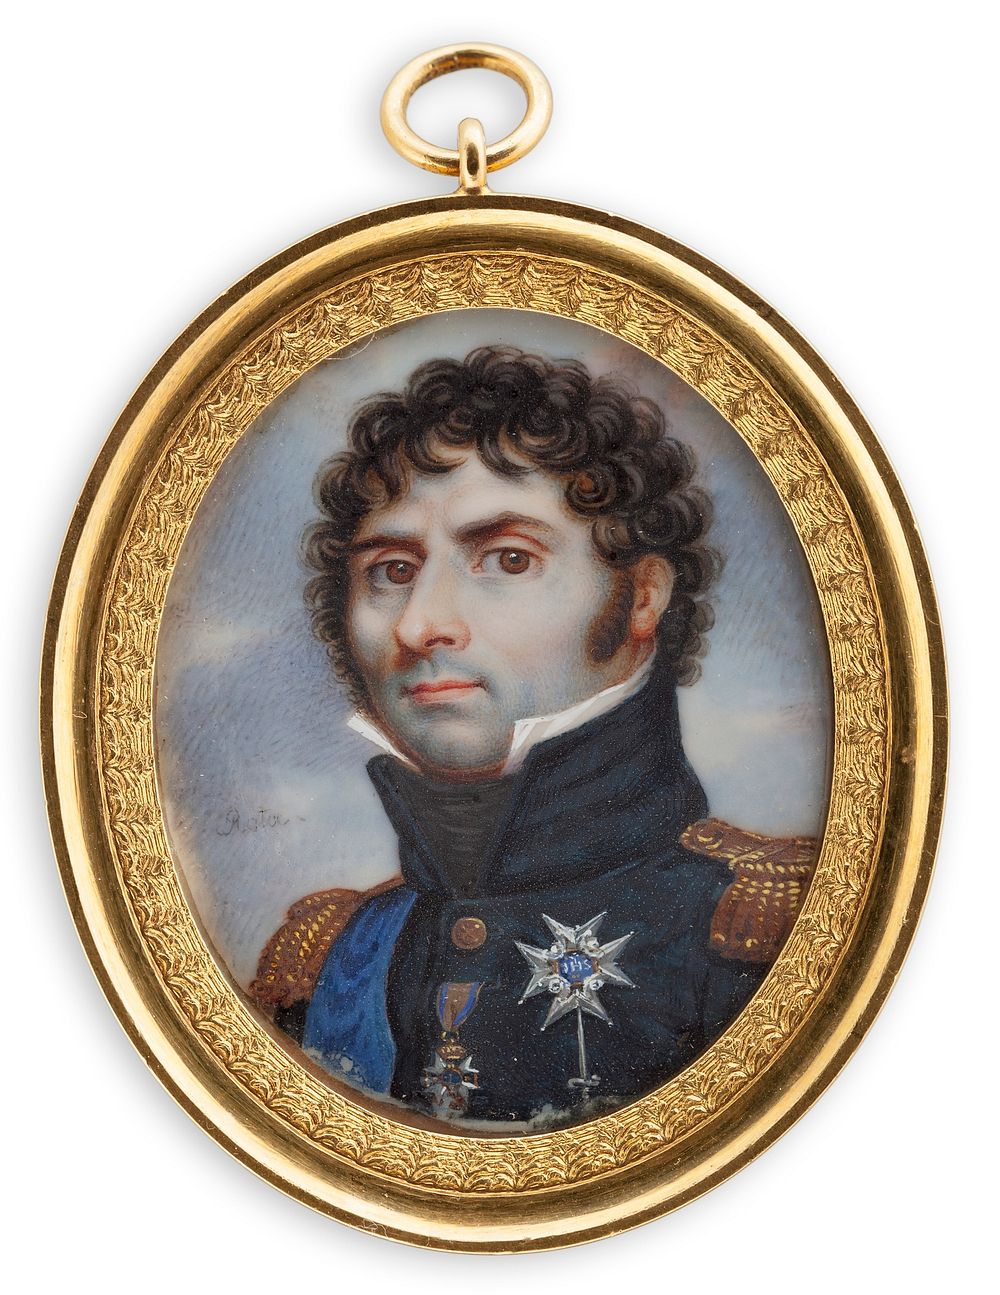 King karl xiv johan, 1796 - 1821